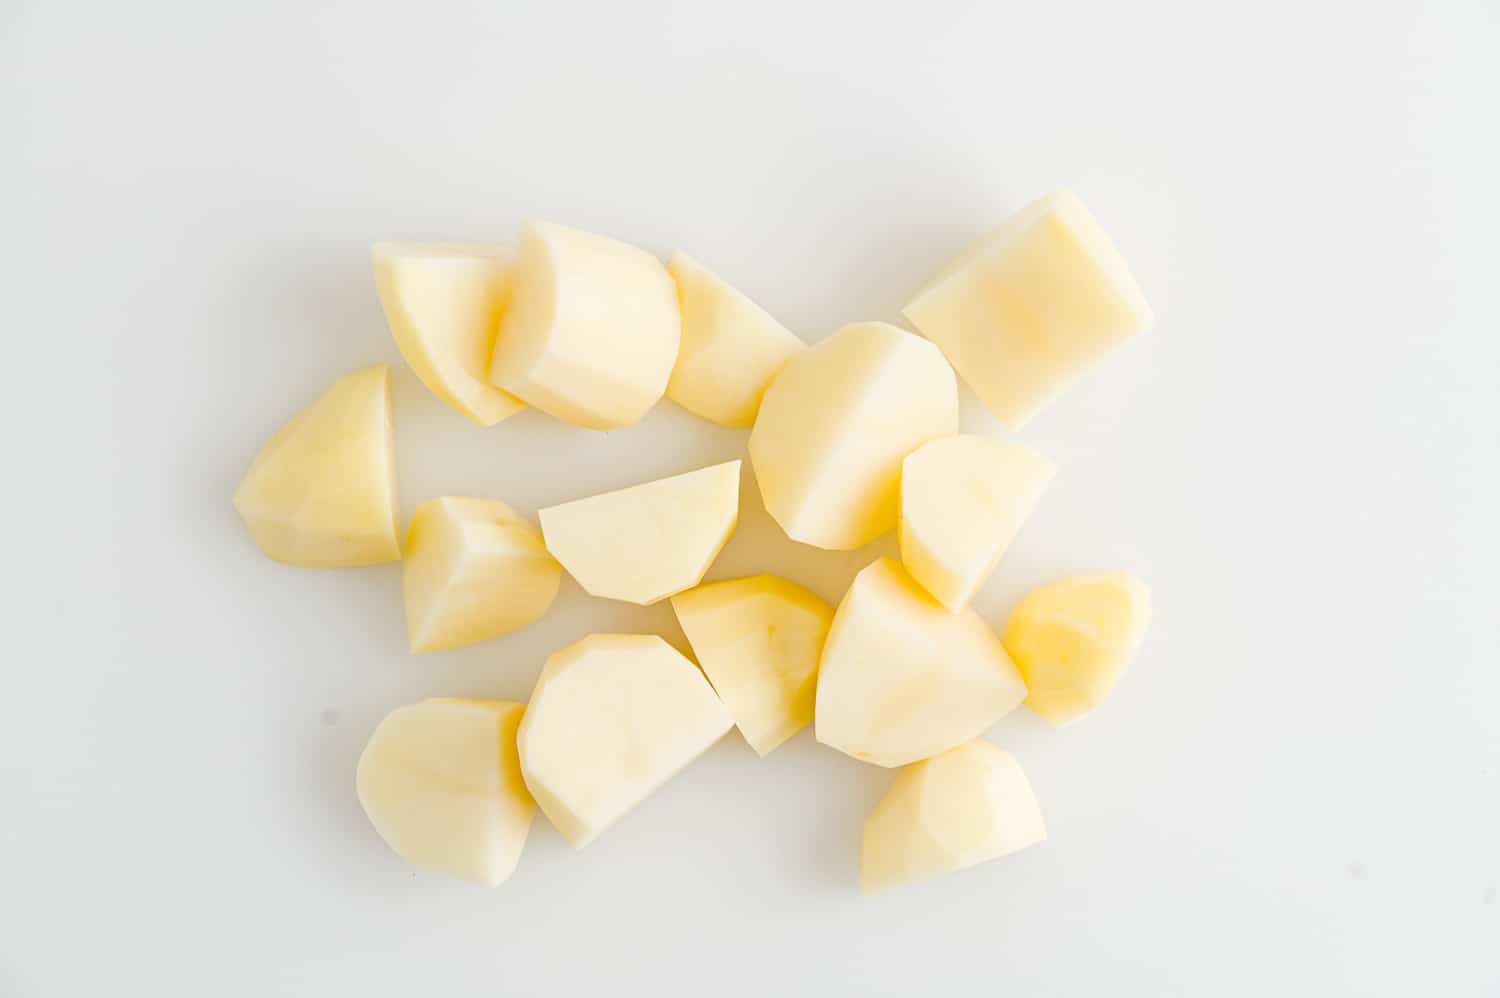 Cut and peeled potatoes.